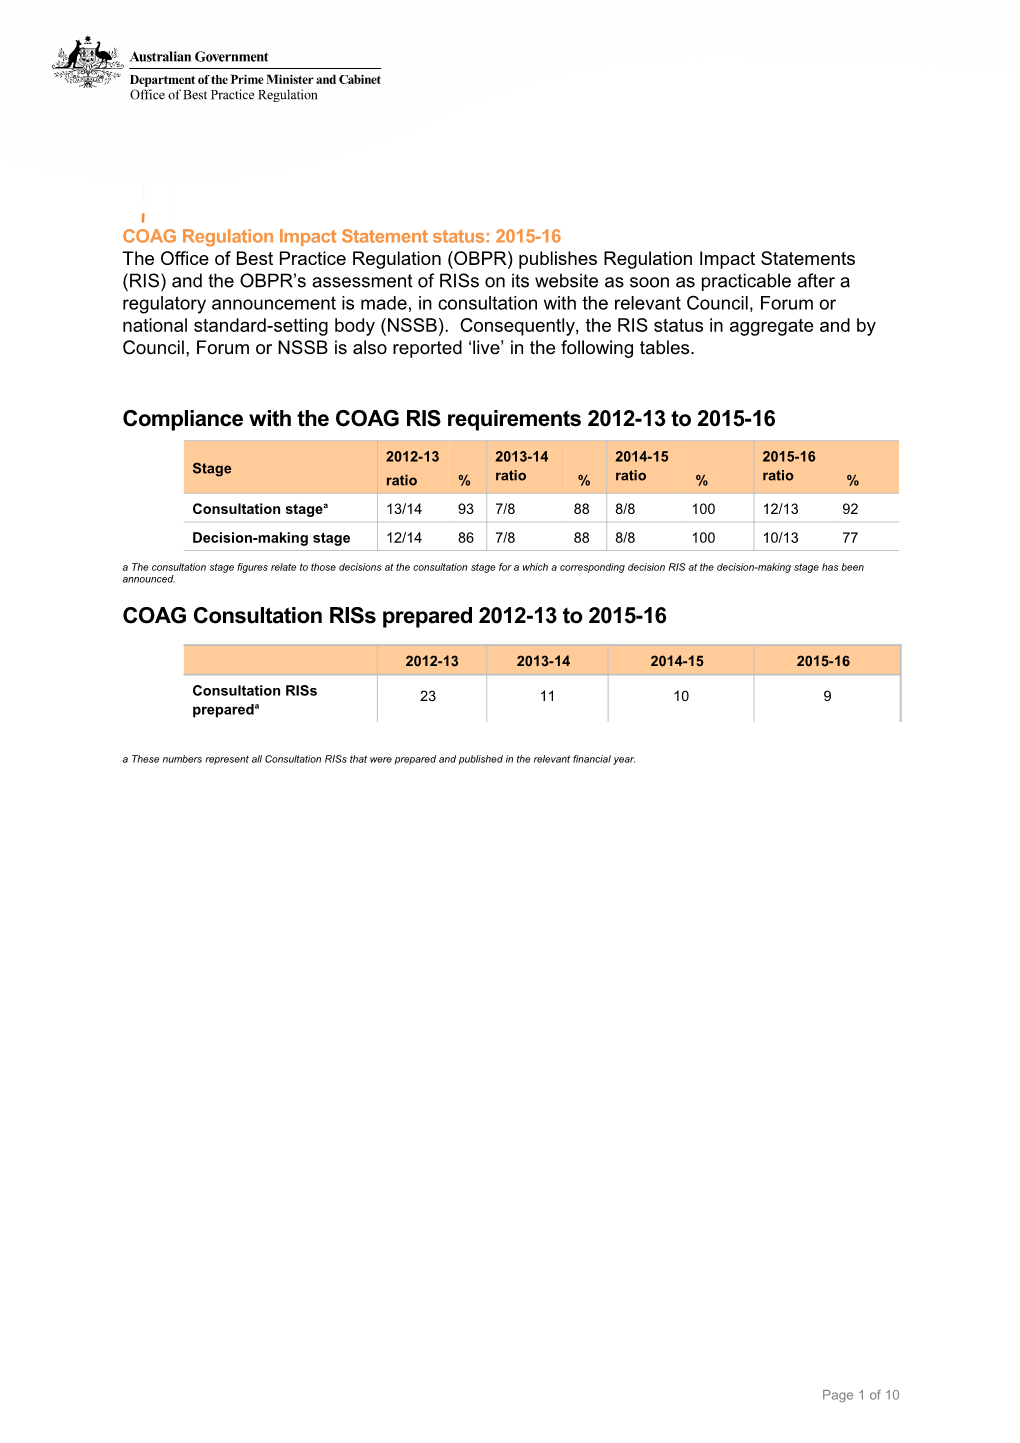 COAG Regulation Impact Statement Status - by Agency 2015-16